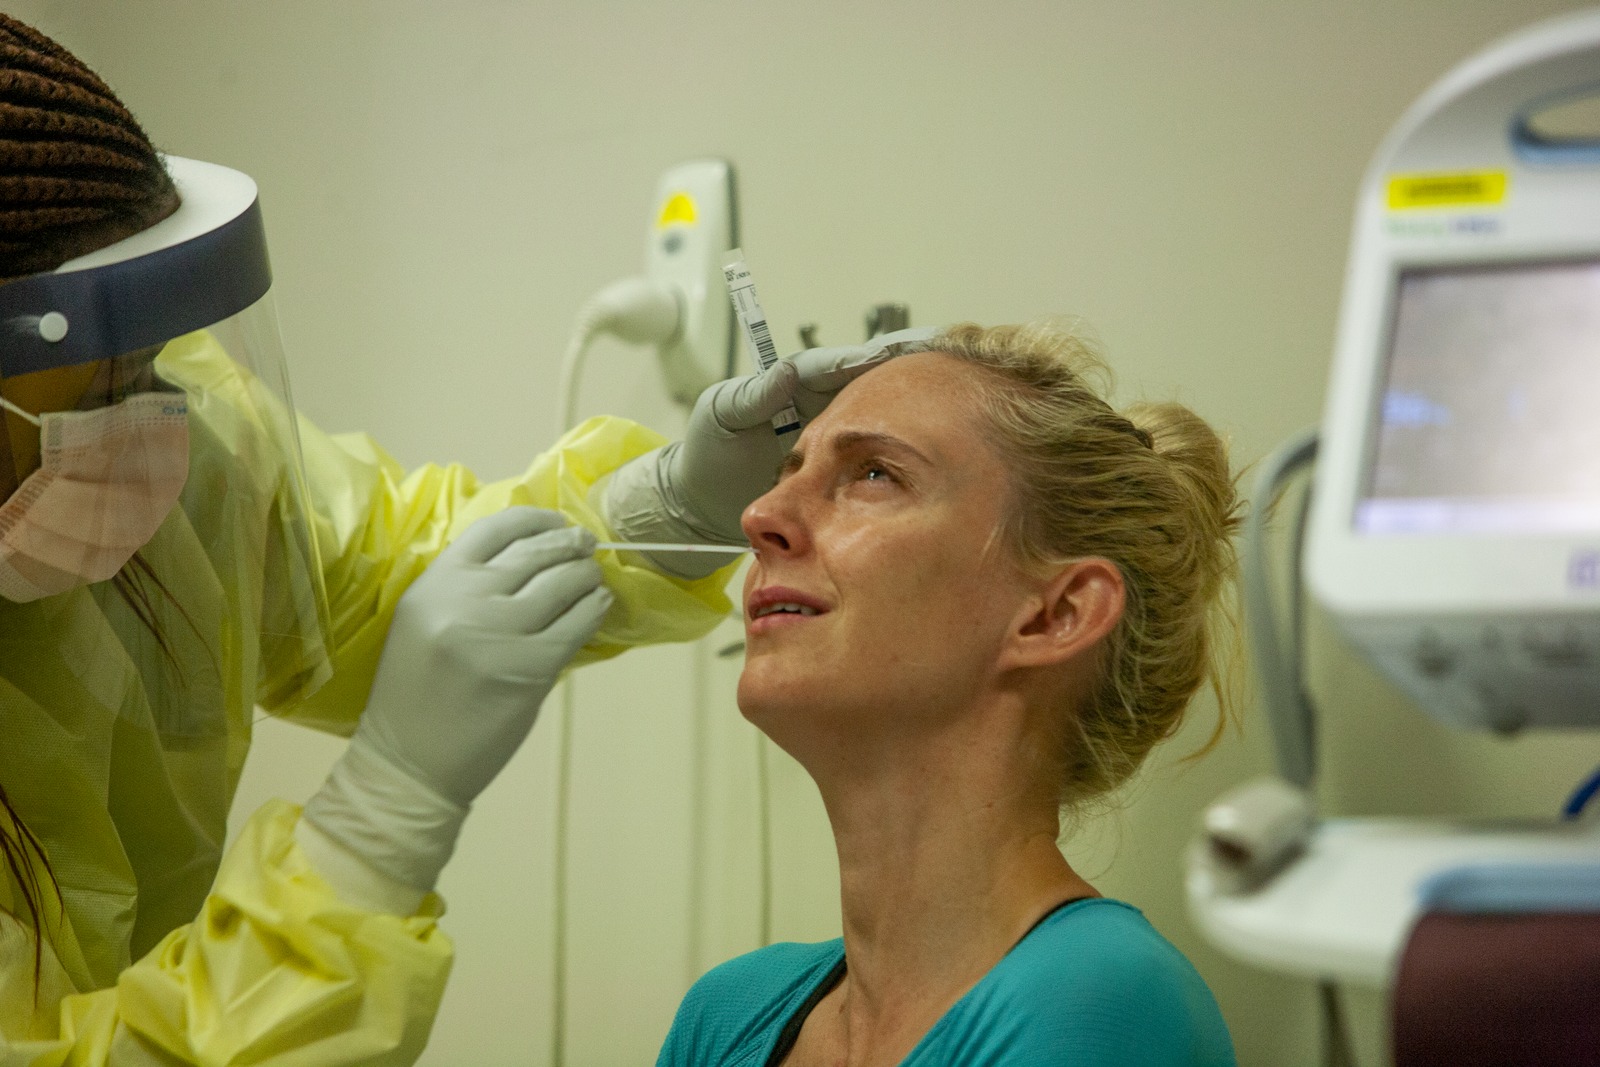 Nurse Nothabo Mbambo performing a nasal swab on patient Sarah Roettgers, Princess Alexandra Hospital, Brisbane, 7 April 2020